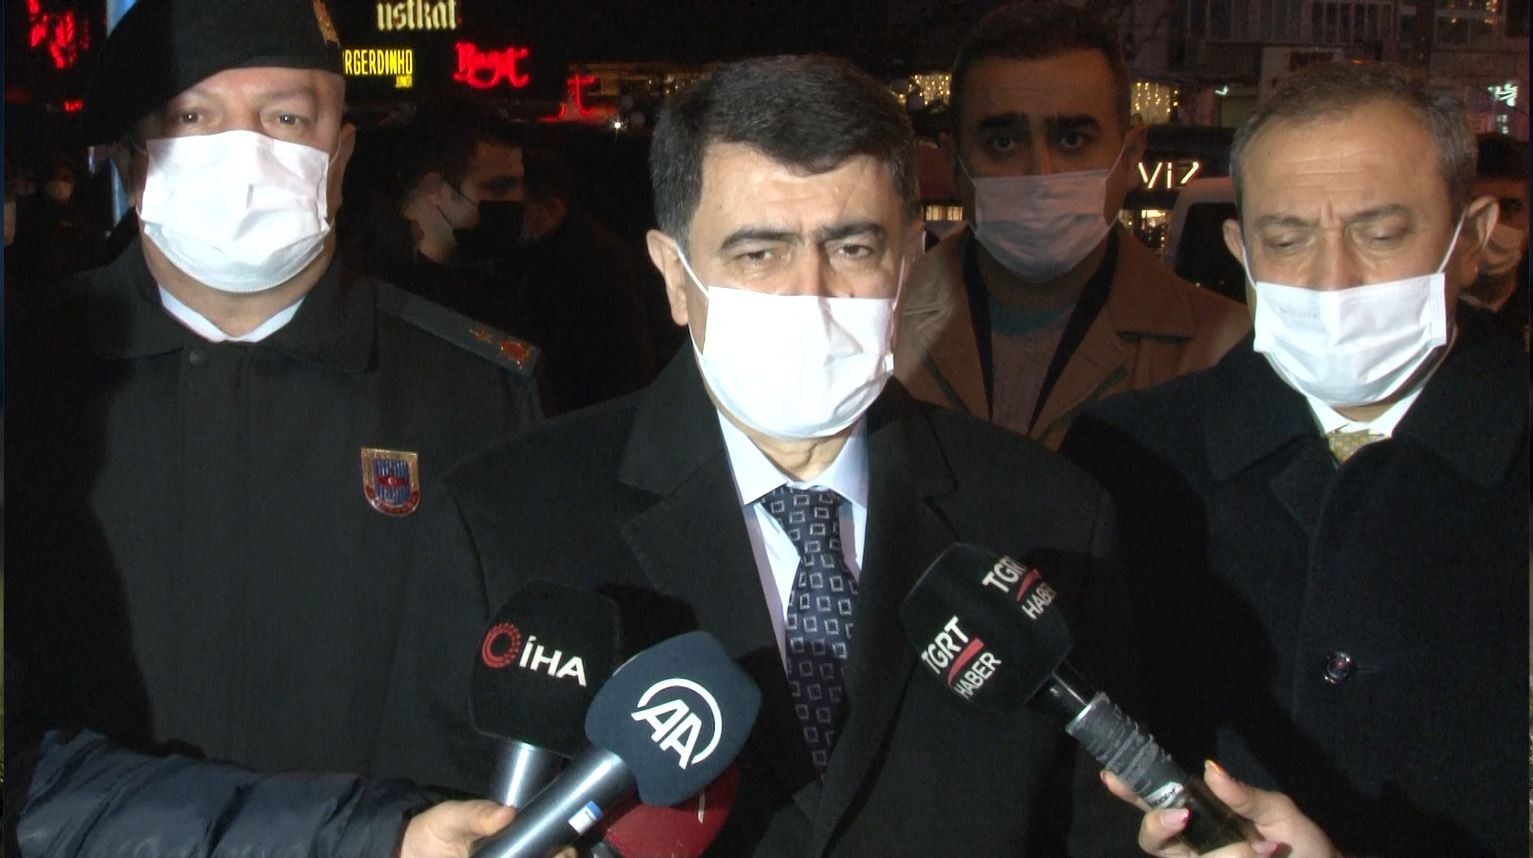 Ankara Valisi Şahin’den polis ekiplerine ziyaret #ankara